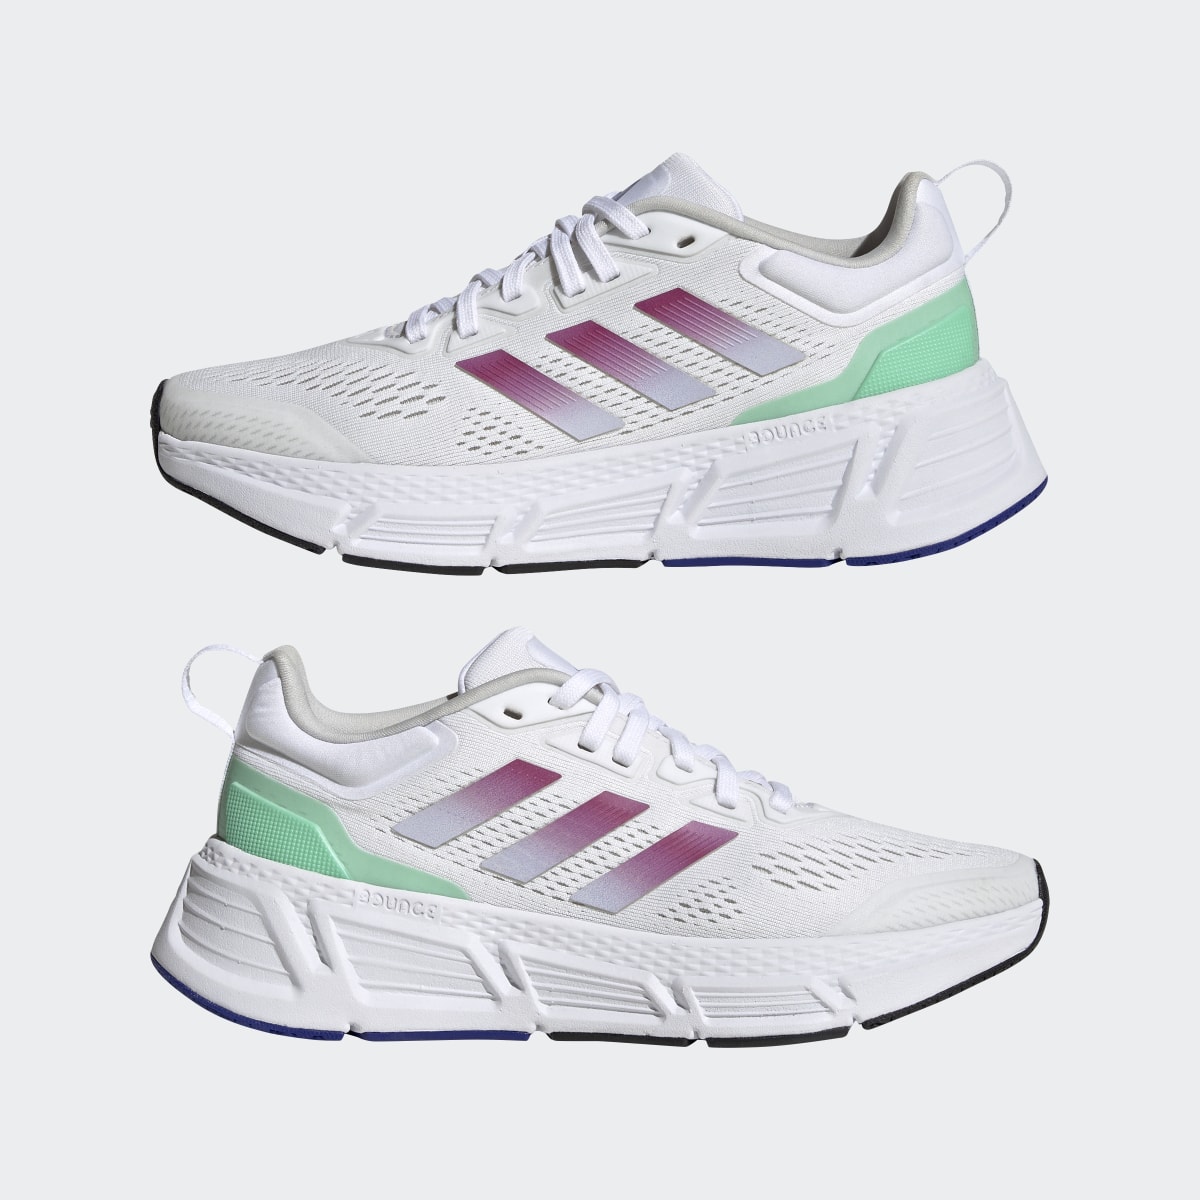 Adidas Questar Schuh. 8